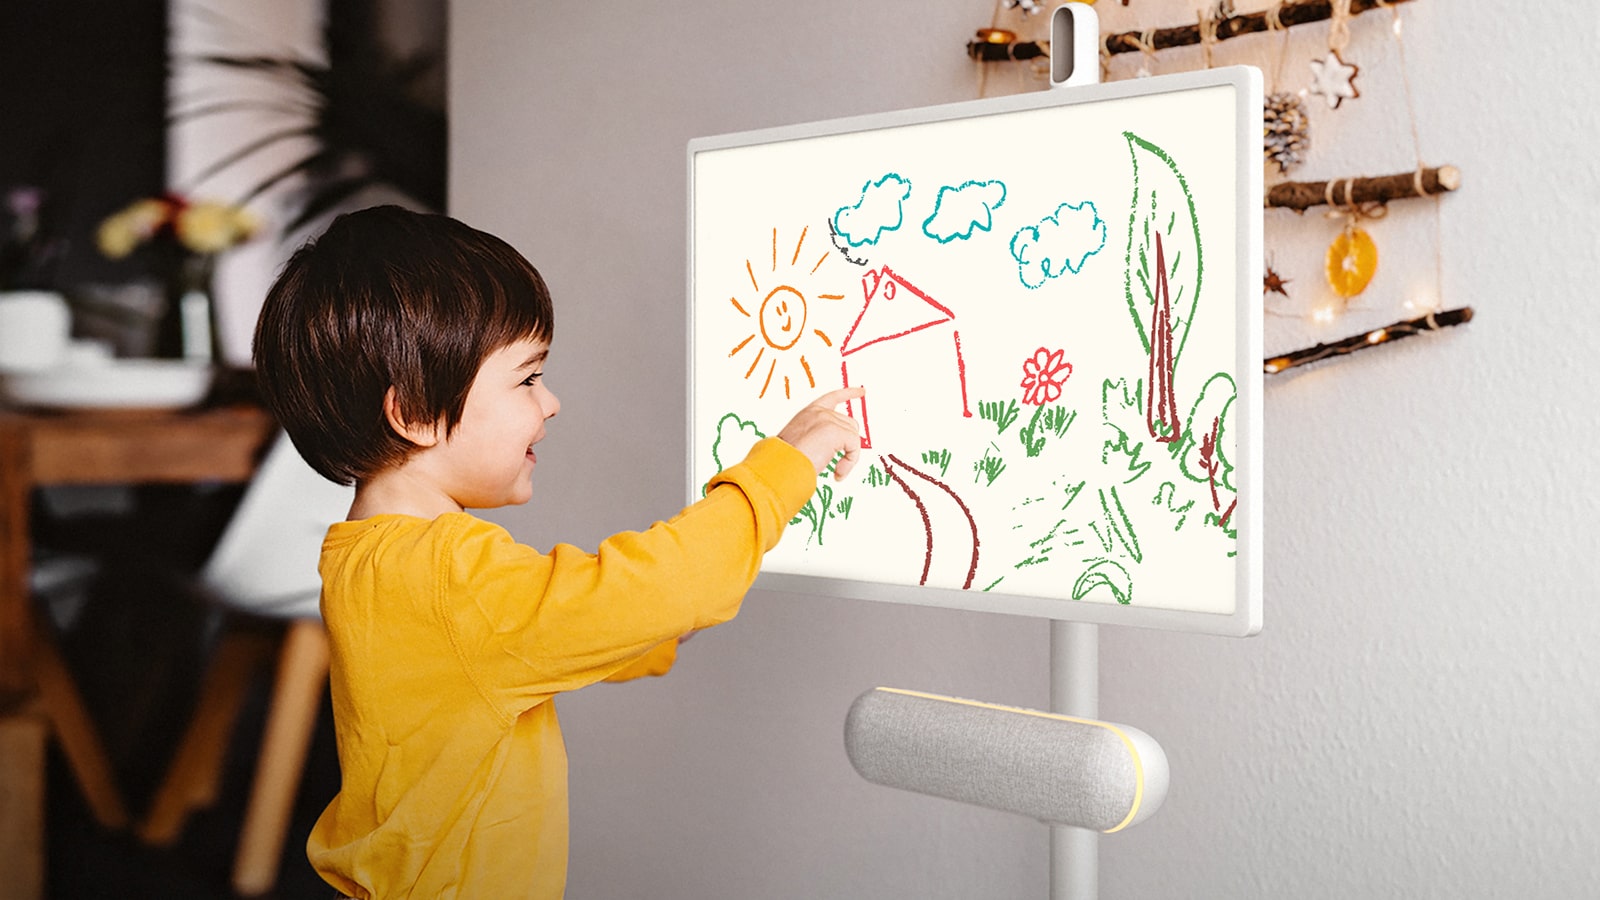 LG StanbyME 放置在廚房中，並連接著 LG StanbyME Speaker XT7S。螢幕中一個孩子在畫畫，喇叭的黃色氛圍燈光亮起。